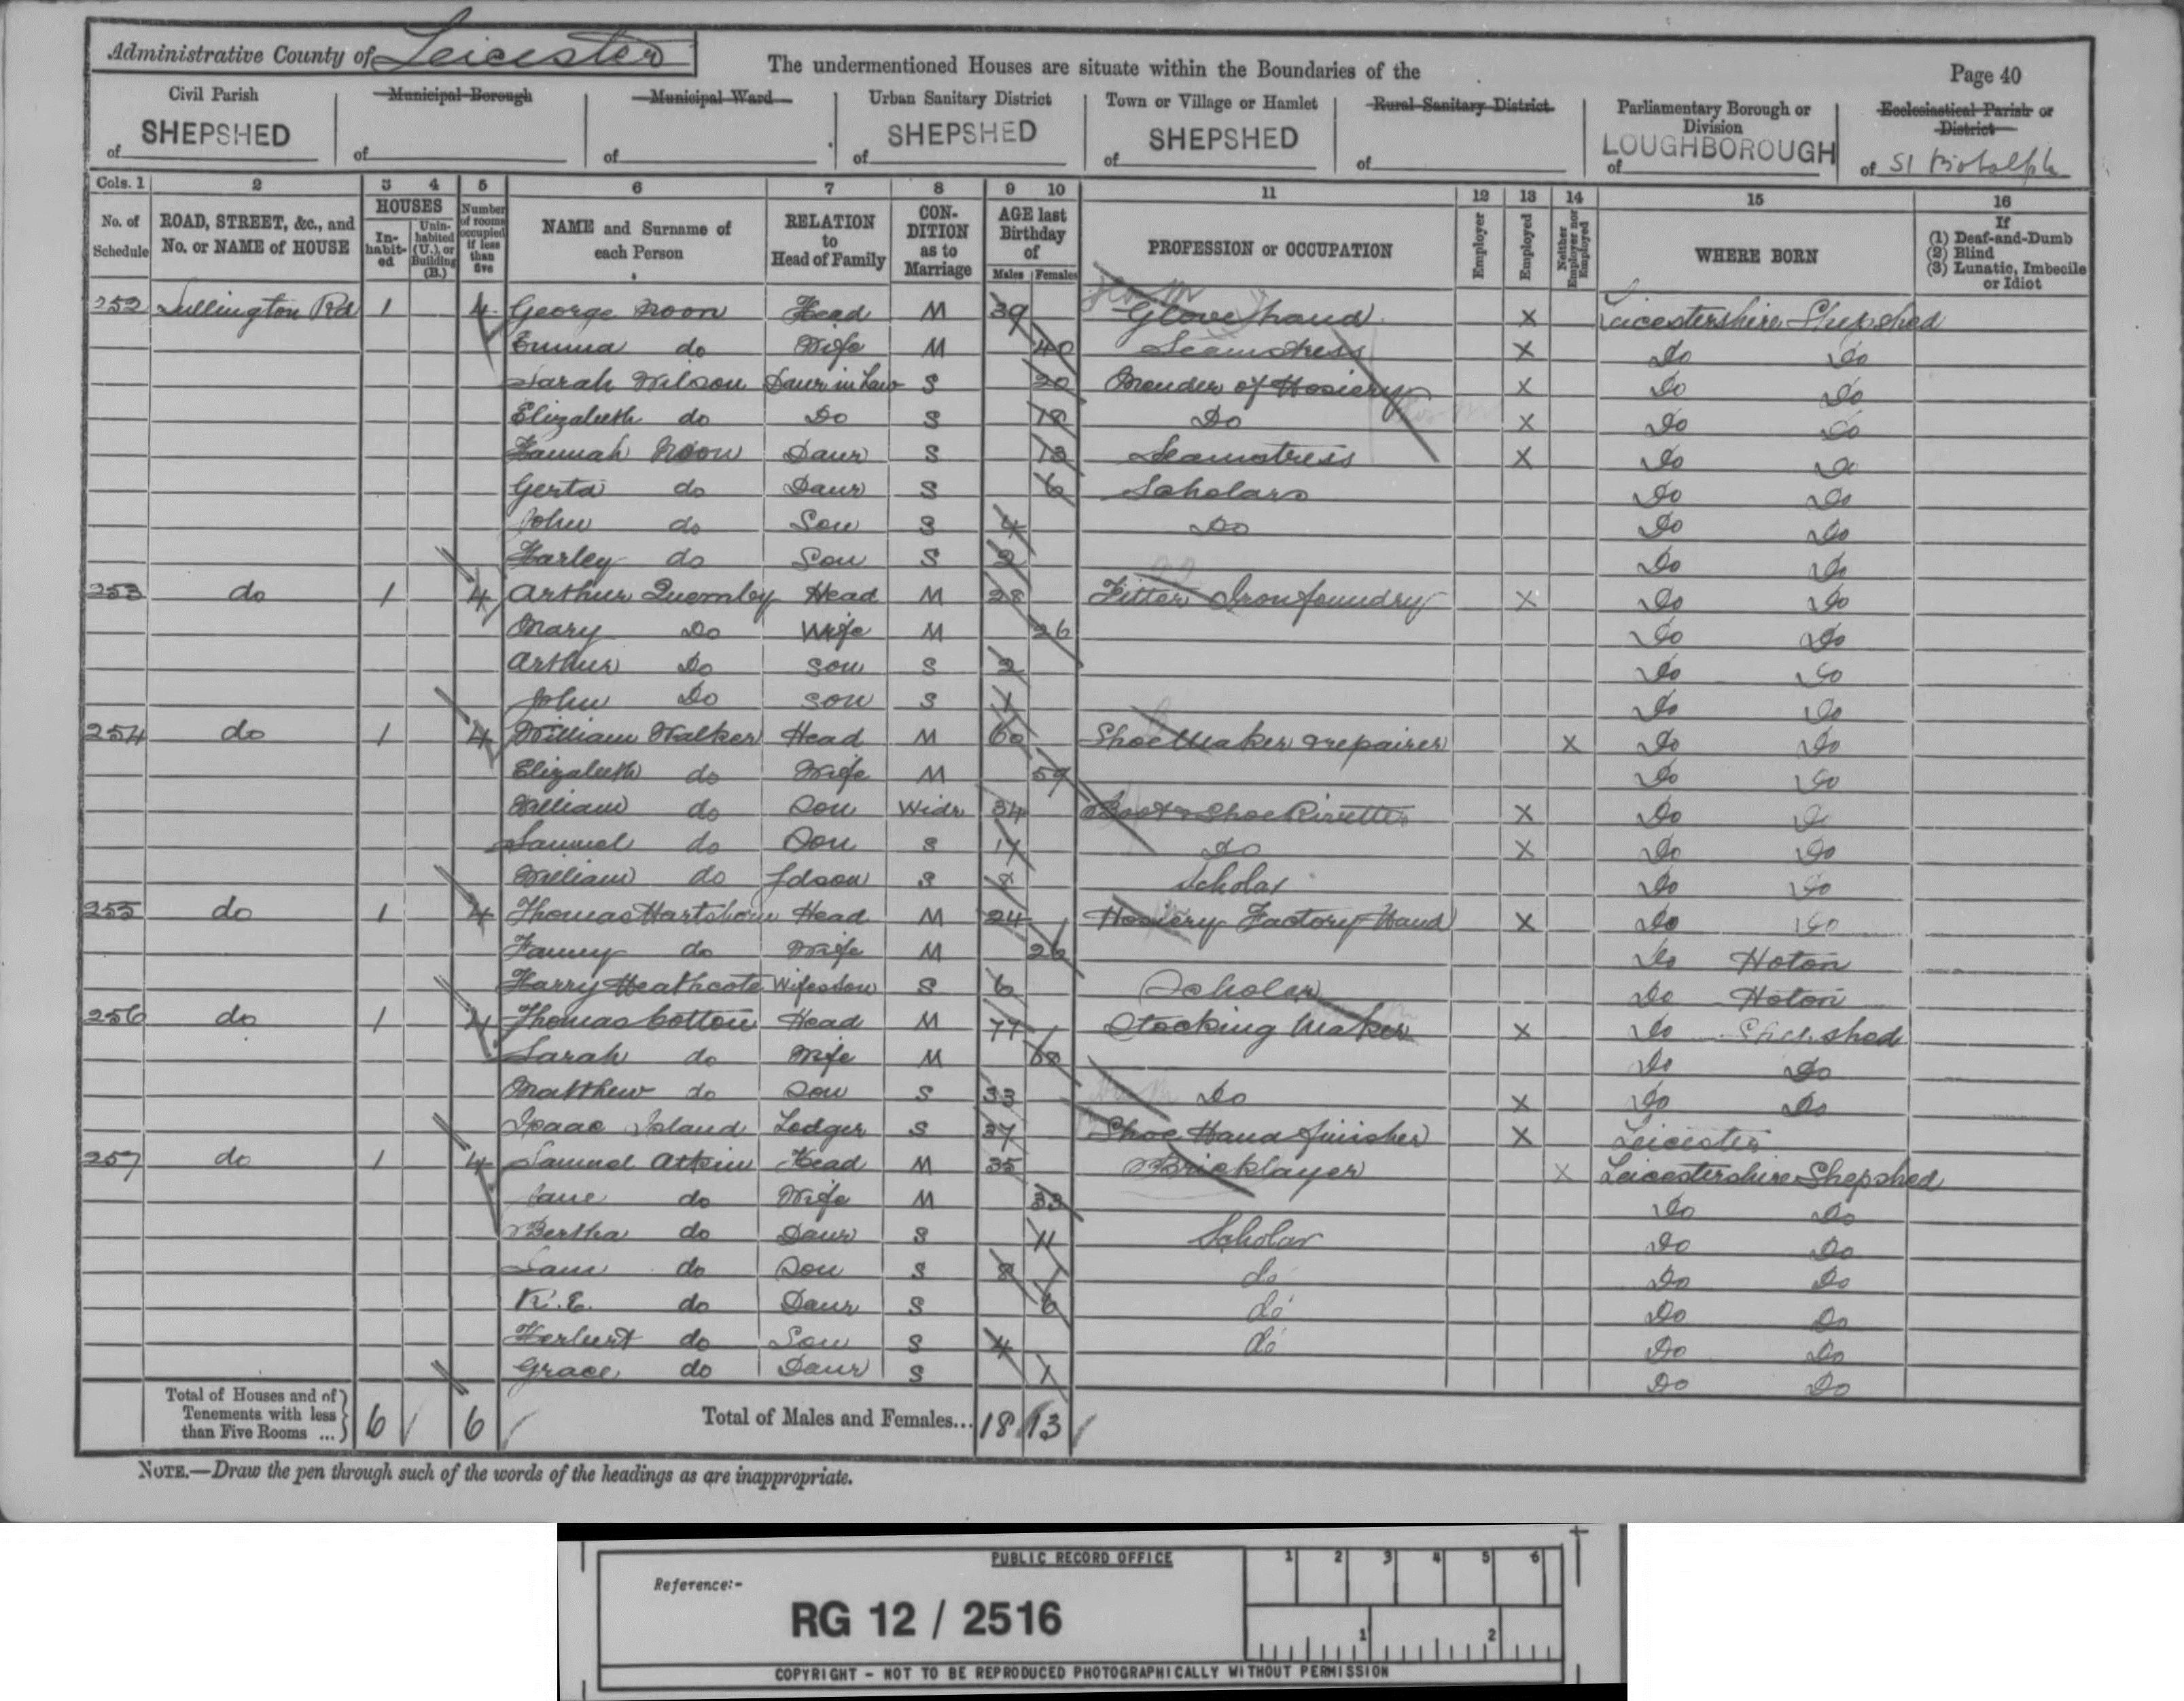 Samual Atkin - Jane 1891 Census